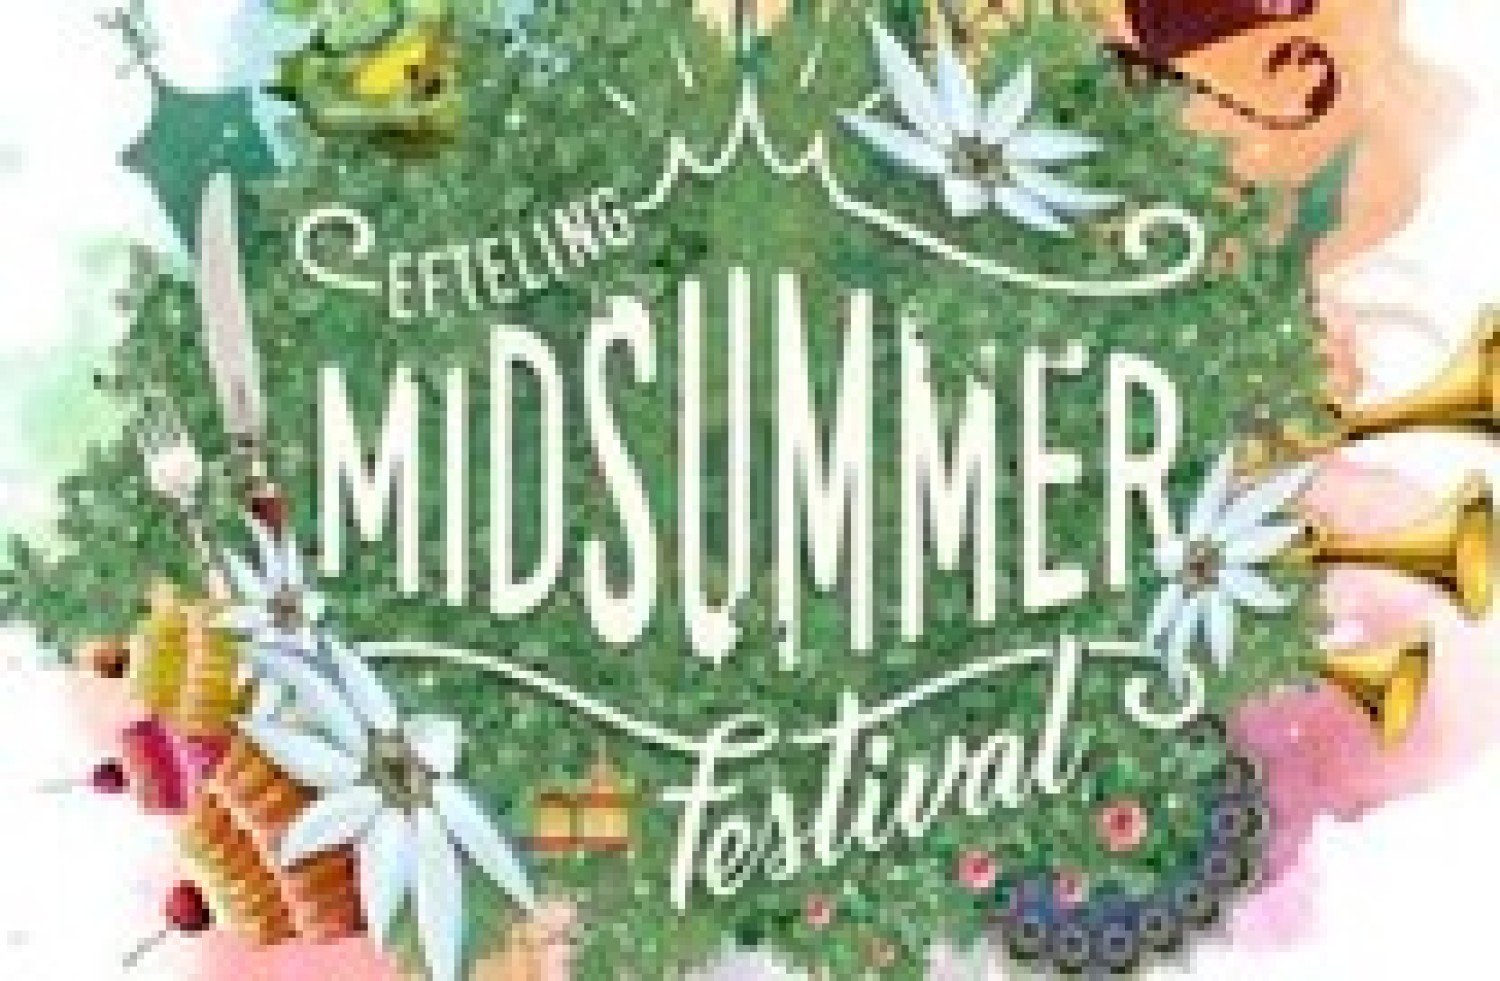 Party report: Efteling Midsummer Festival, Kaatsheuvel (18-06-2016)